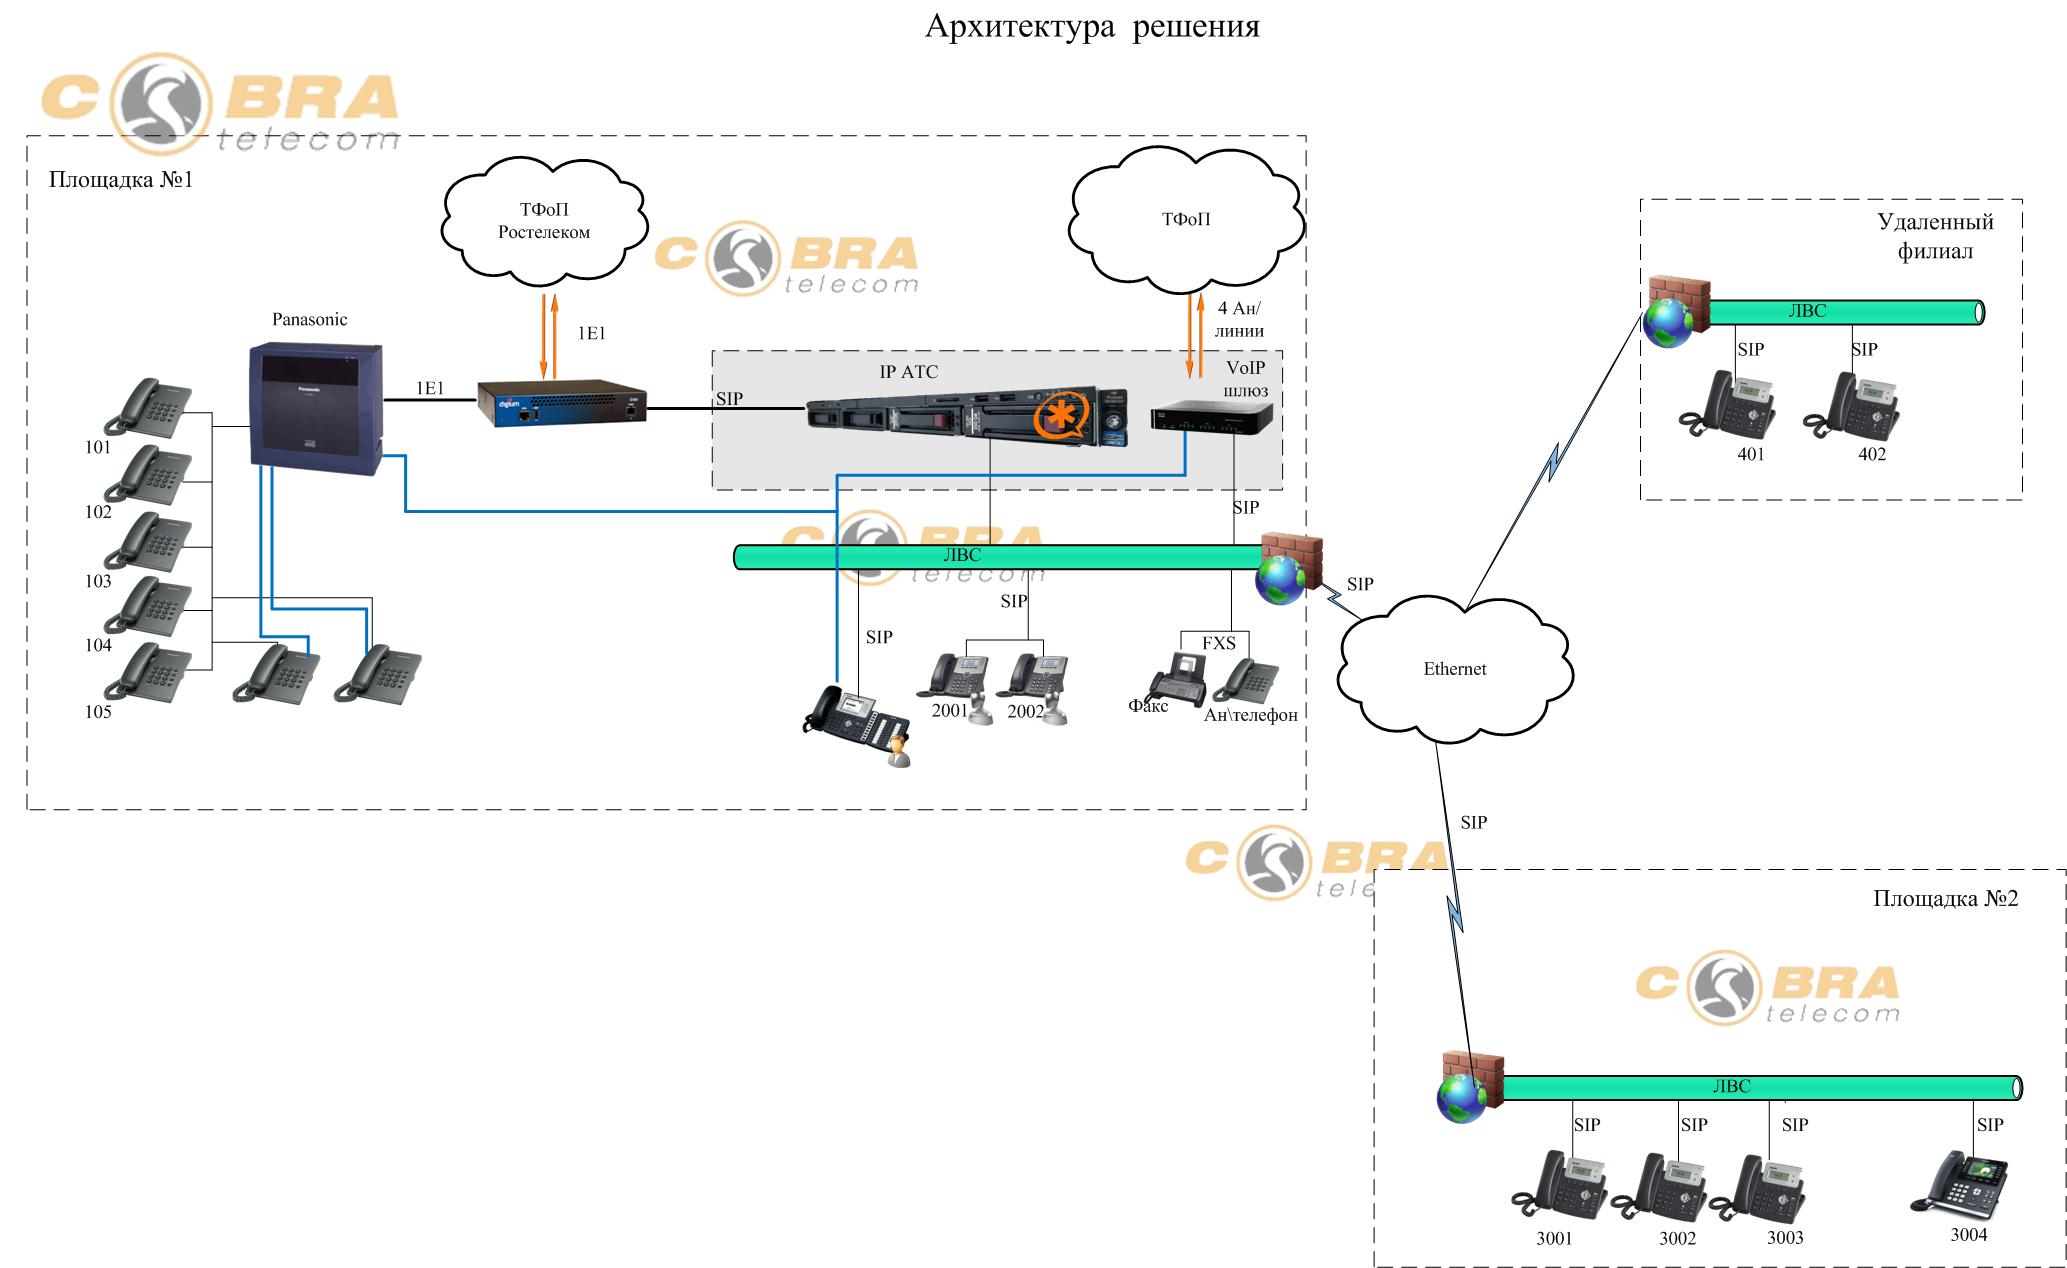 Cхема организации связи Астериск с Panasonic посредством Е1 VoIP шлюза